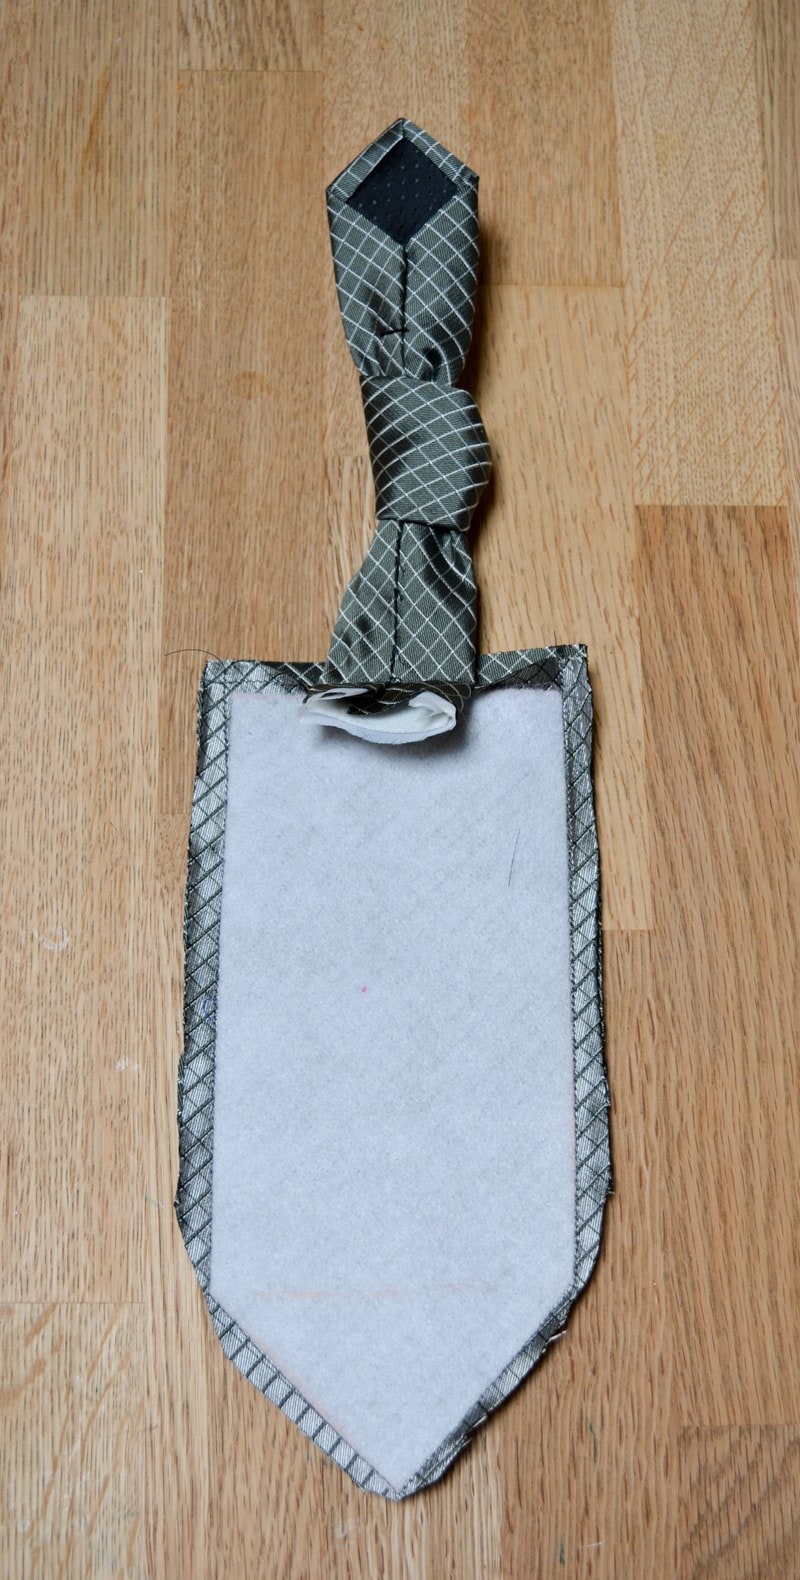 phone holder tie piecing together